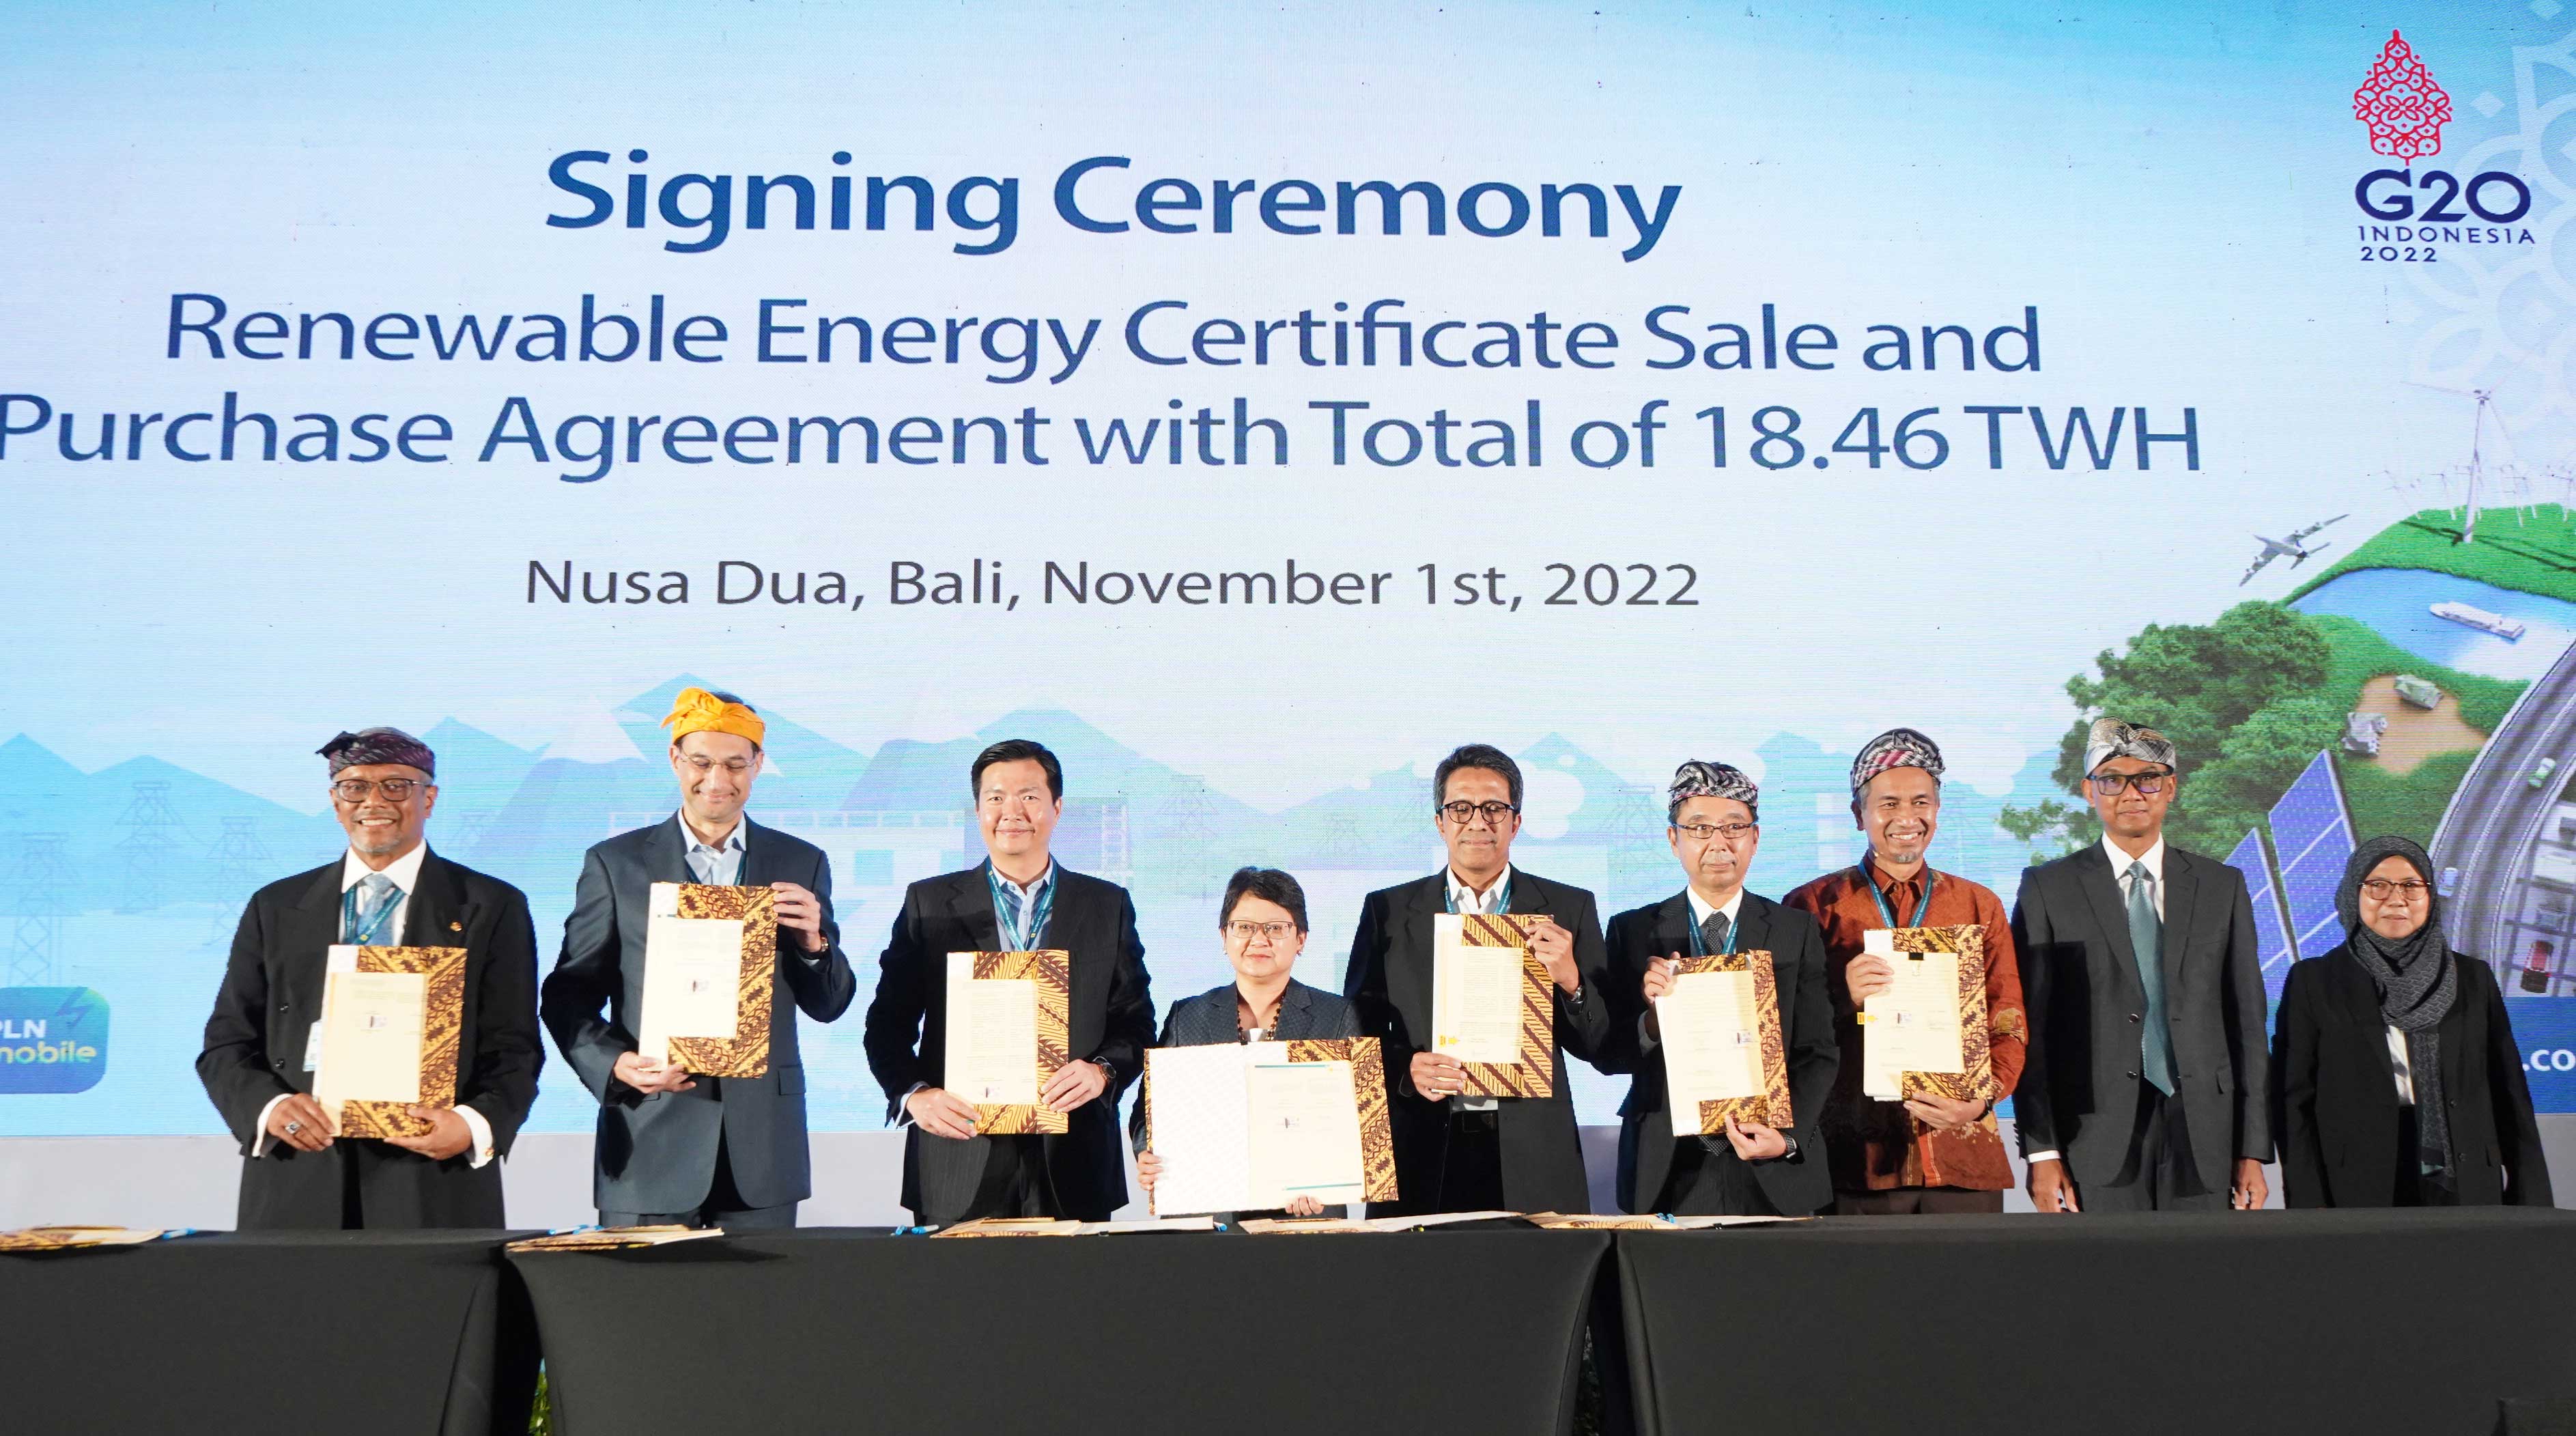 Tambang Emas Tujuh Bukit menandatangani perjanjian pembelian tenaga listrik dari PLN yang berasal dari pembangkit listrik yang bersumber dari energi terbarukan.